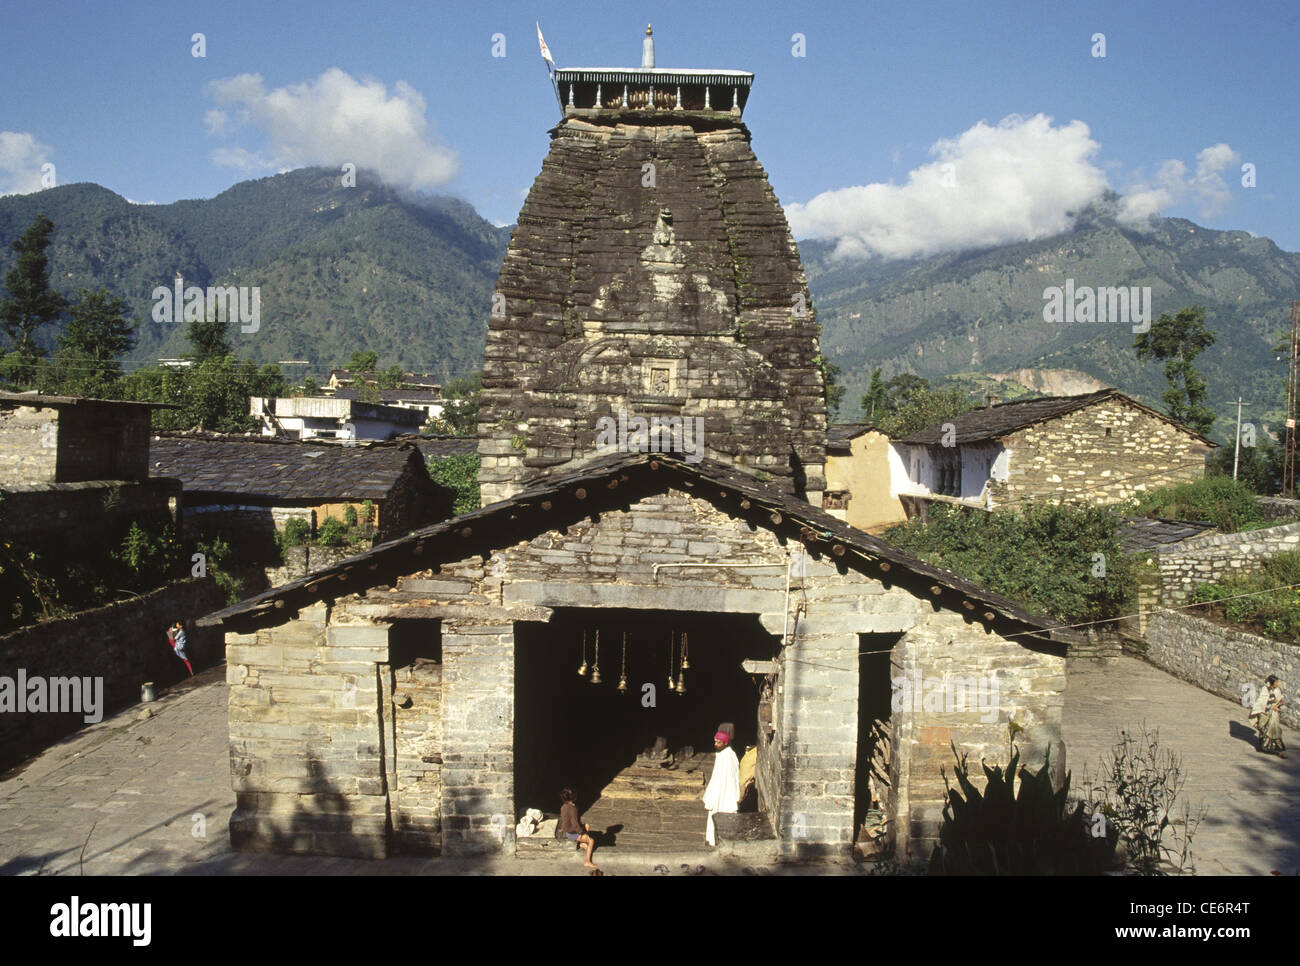 Gopinath temple ; Shiva temples ; Gopeshwar ; district de Chamoli ; uttarakhand ; uttarakhand ; inde ; asie Banque D'Images